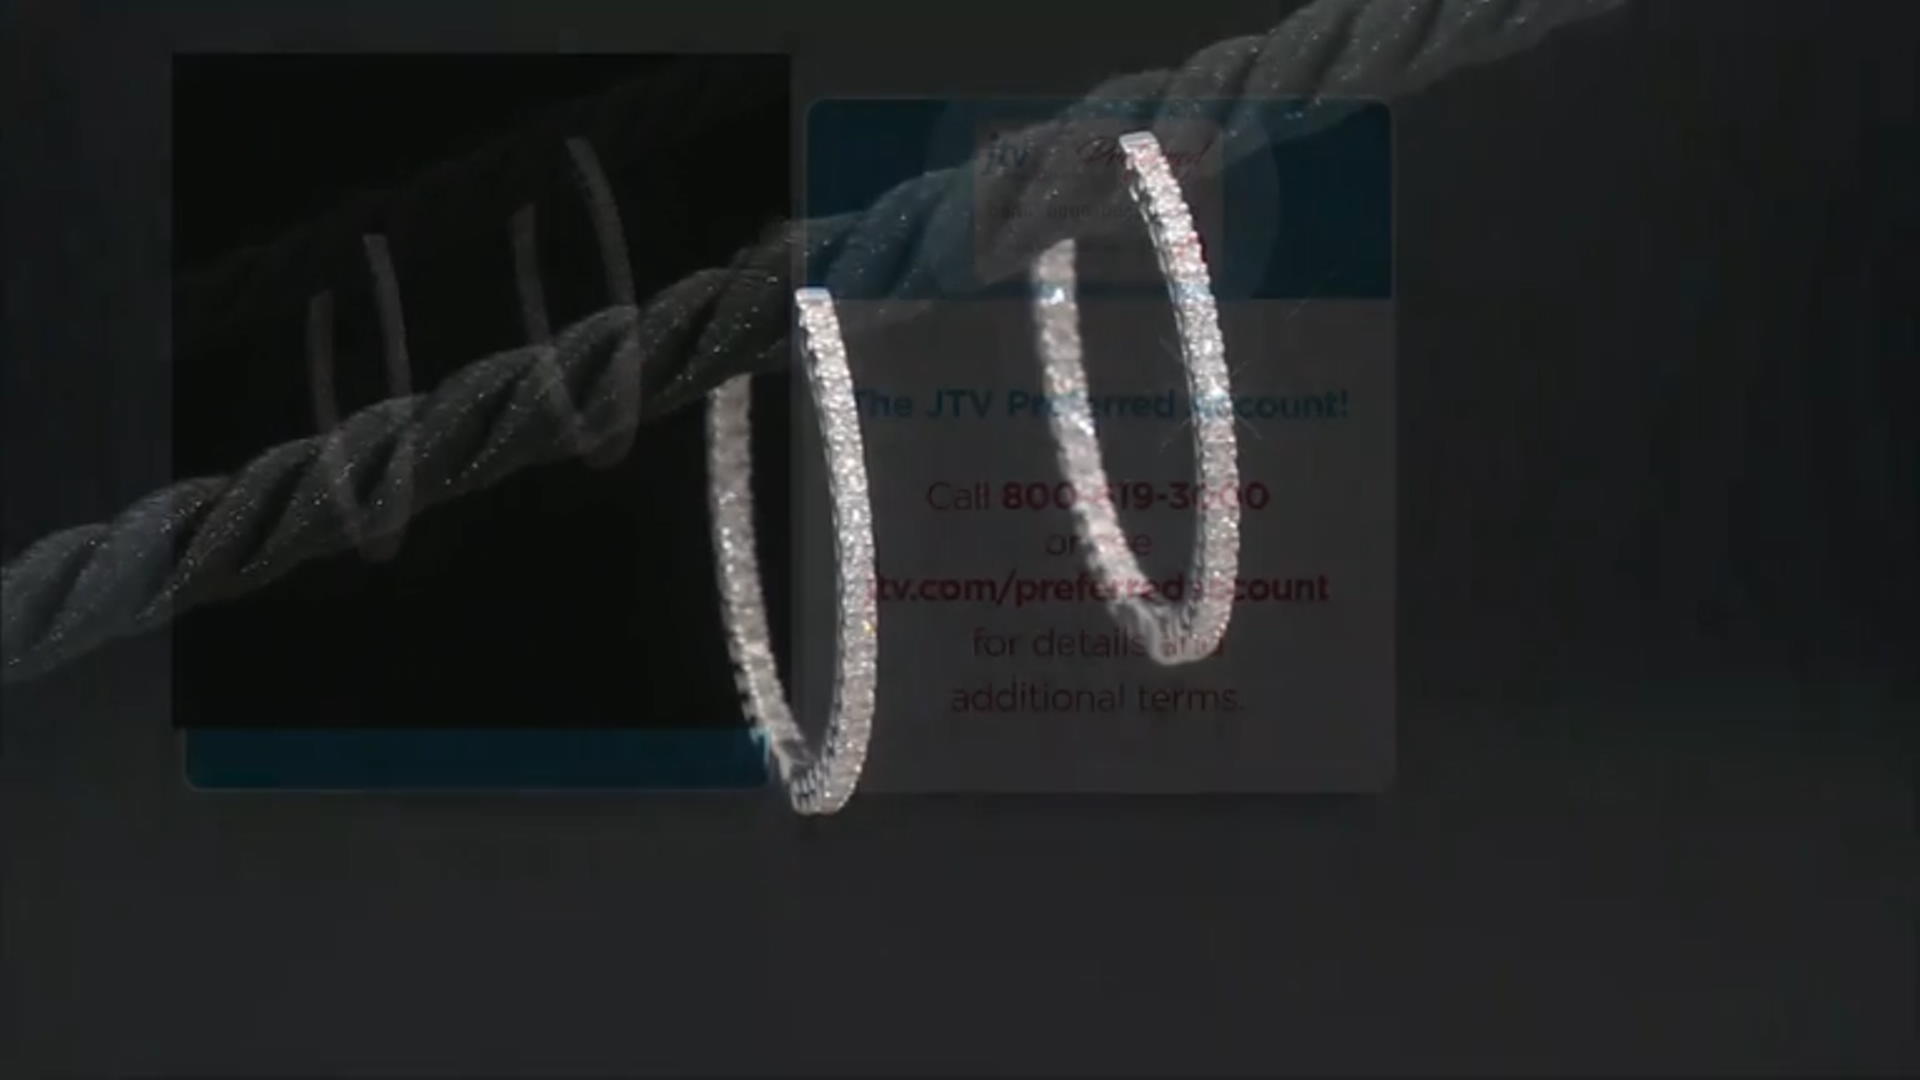 White Lab-Grown Diamond Rhodium Over Sterling Silver Hoop Earrings 0.50ctw Video Thumbnail